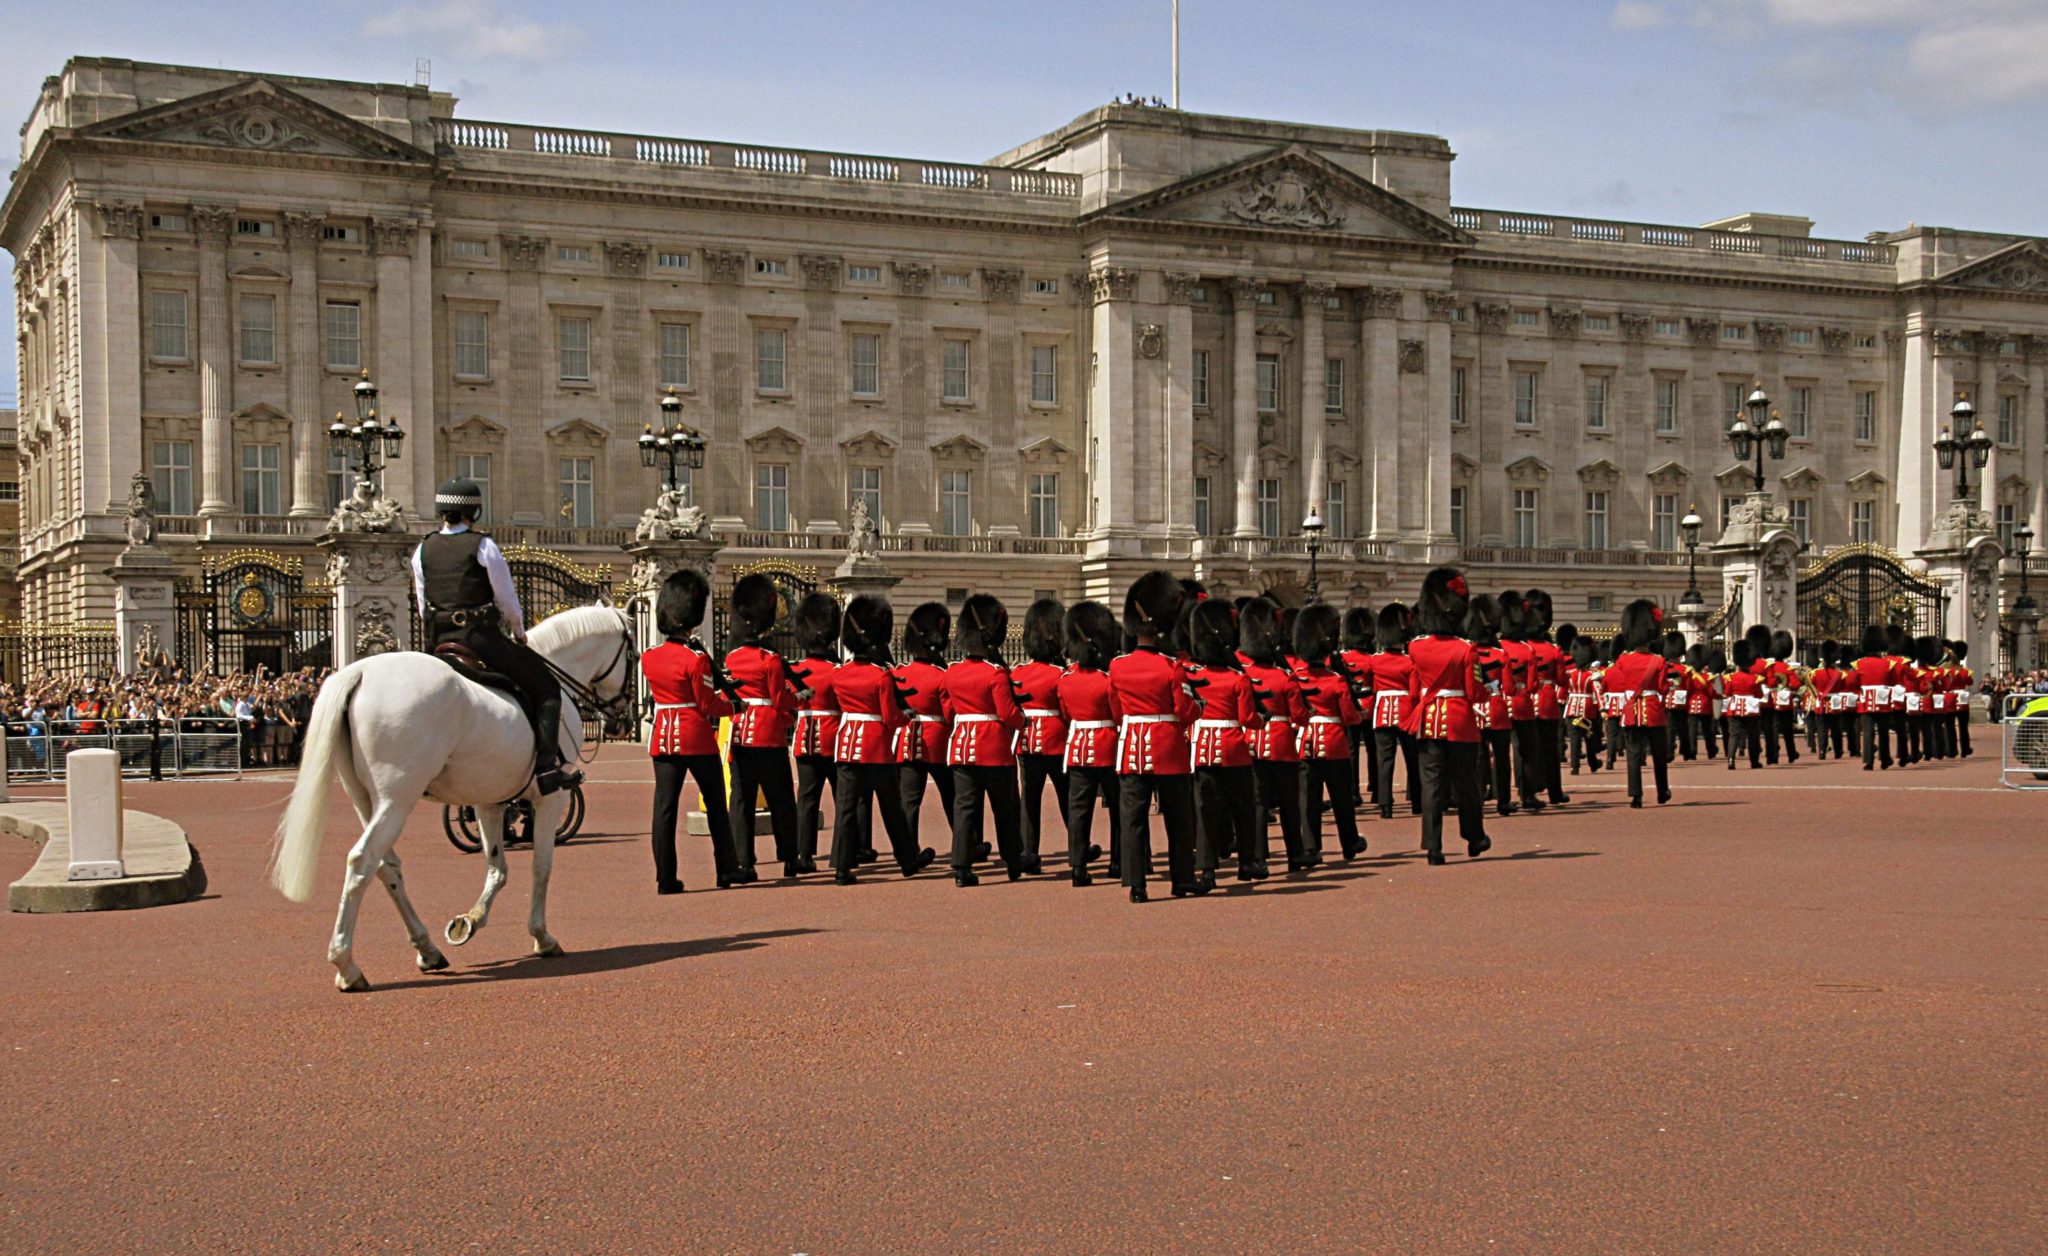 Buckingham Palace: Queen Elizabeth’s Summer Home